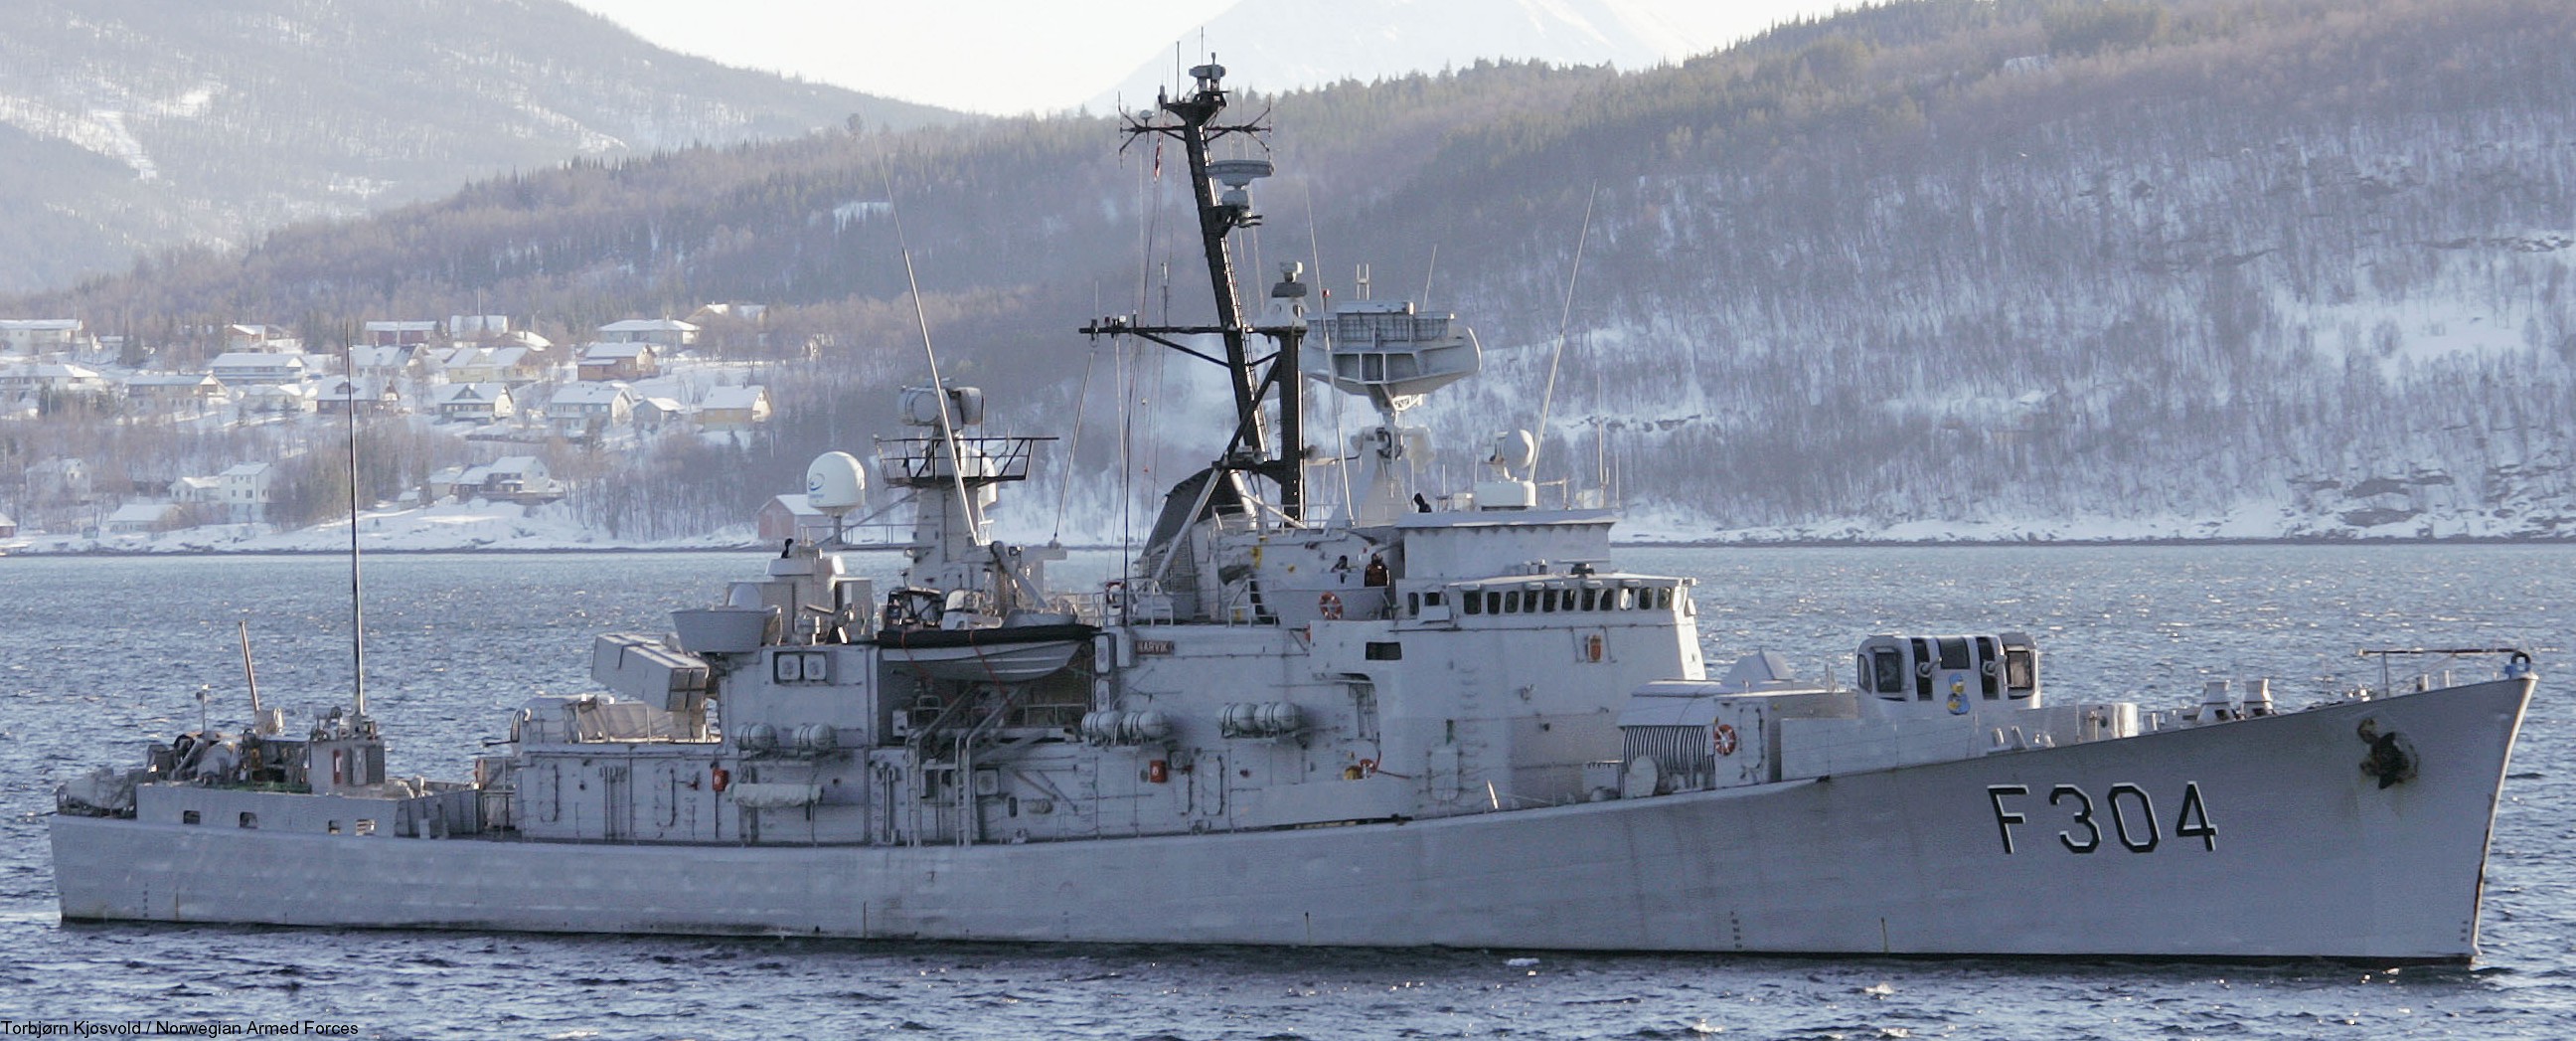 f-304 hnoms narvik knm oslo class frigate royal norwegian navy sjoforsvaret 06